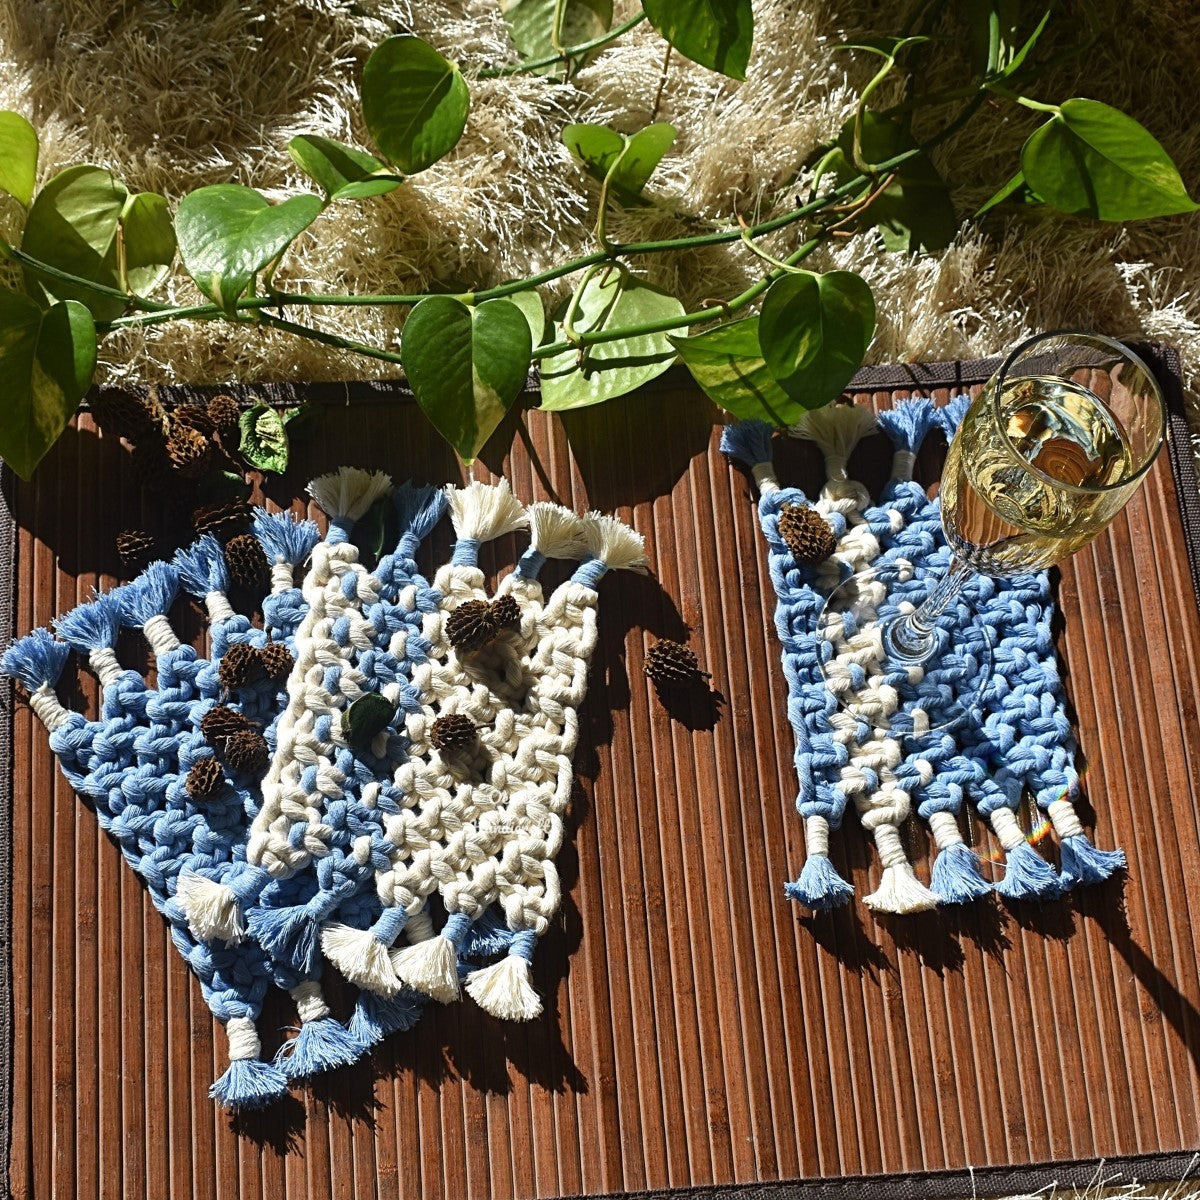 Handmade Macrame Blue & White Coasters (Set of 4)